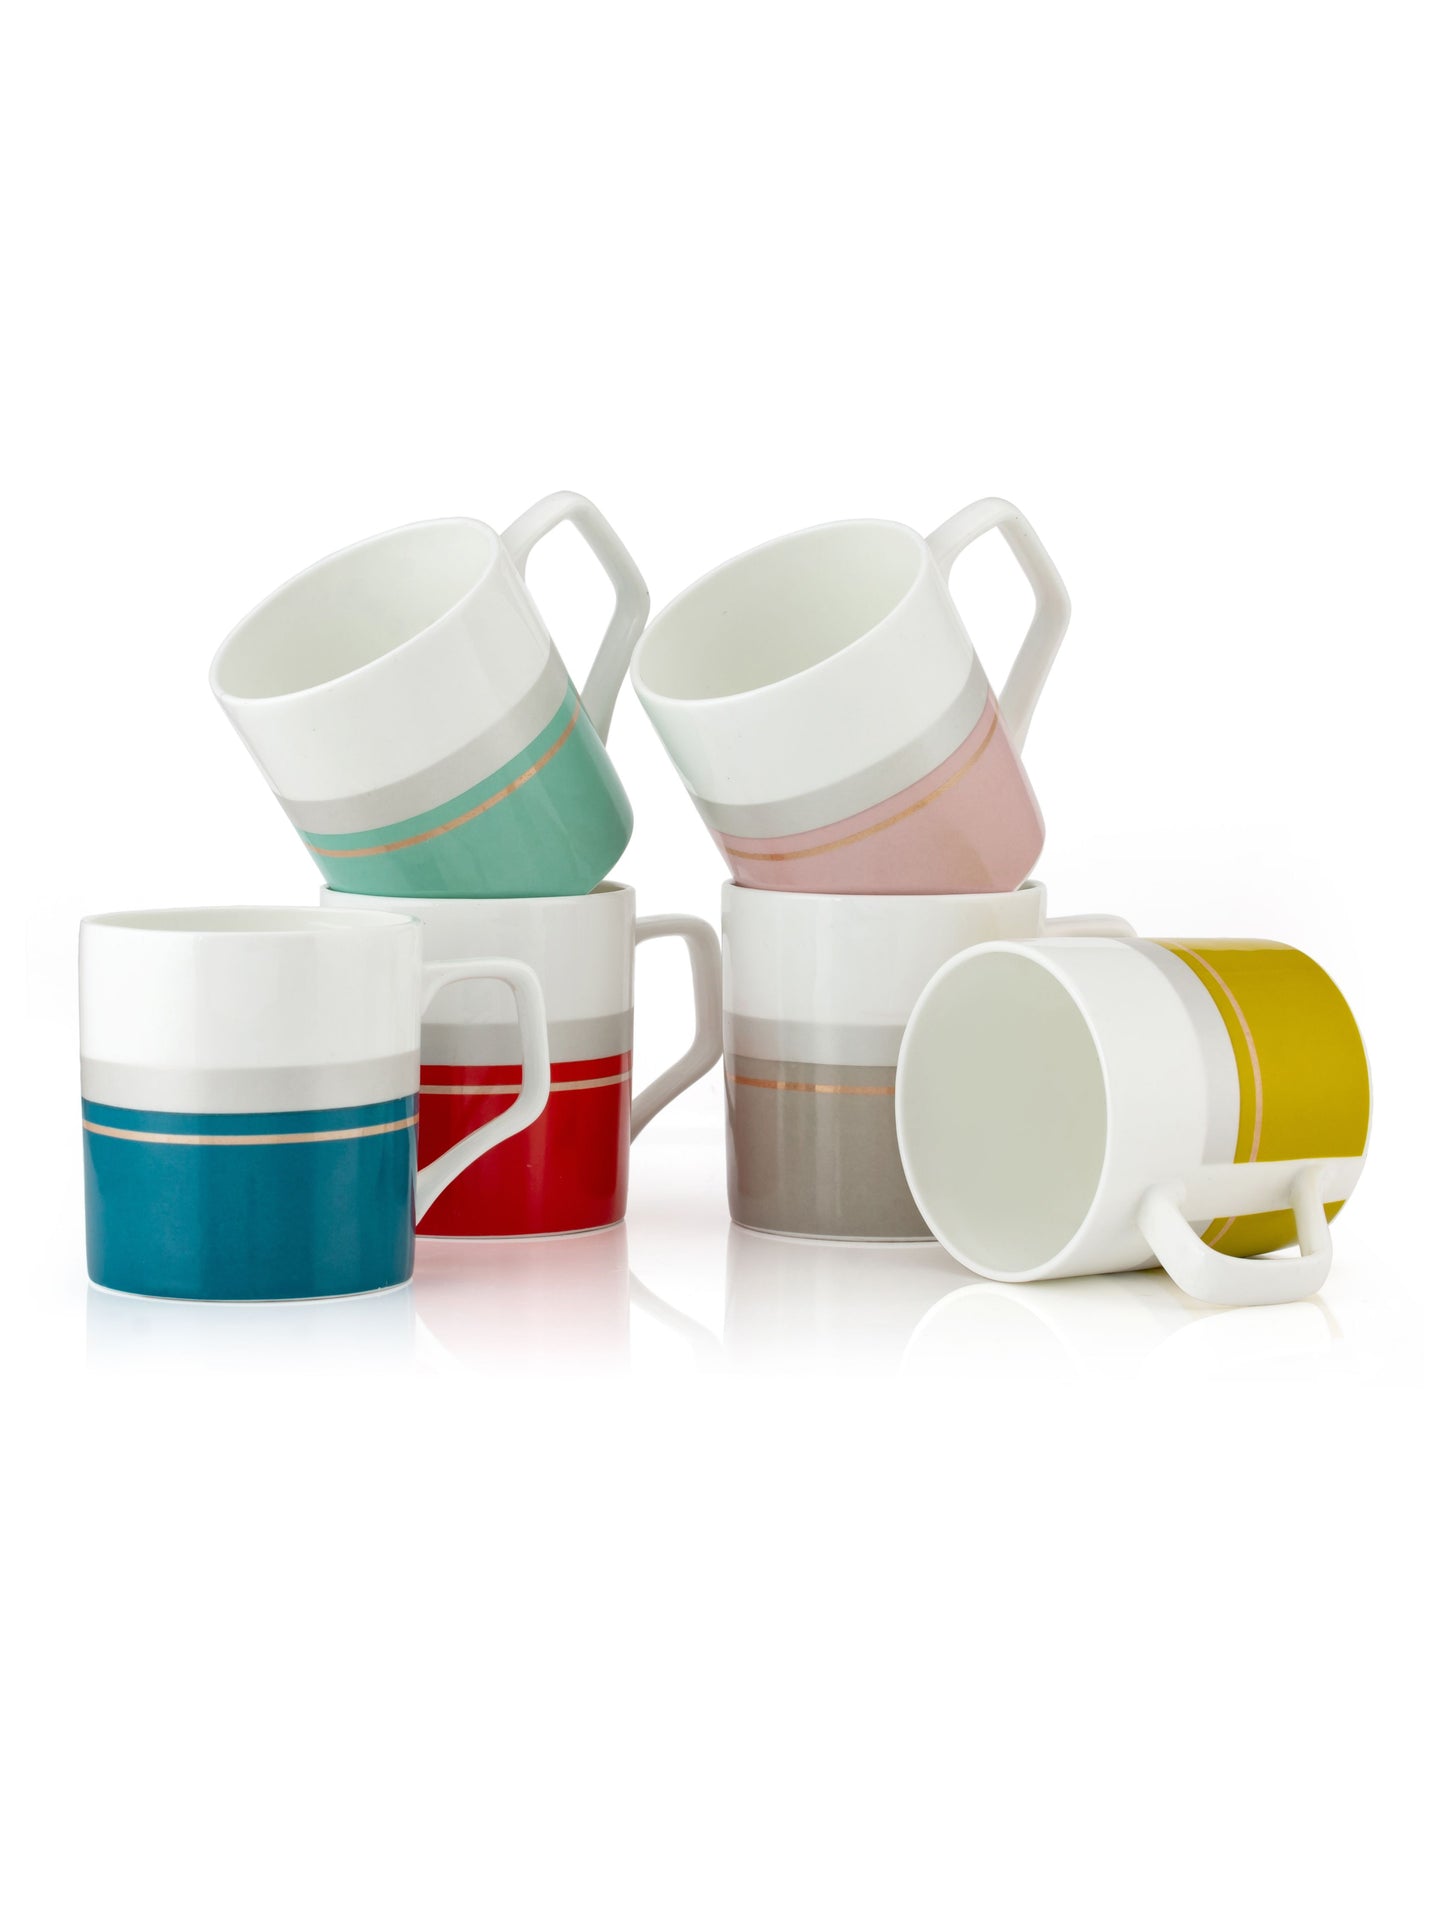 JCPL Director Hilton Coffee & Tea Mug Set of 6 (4550)